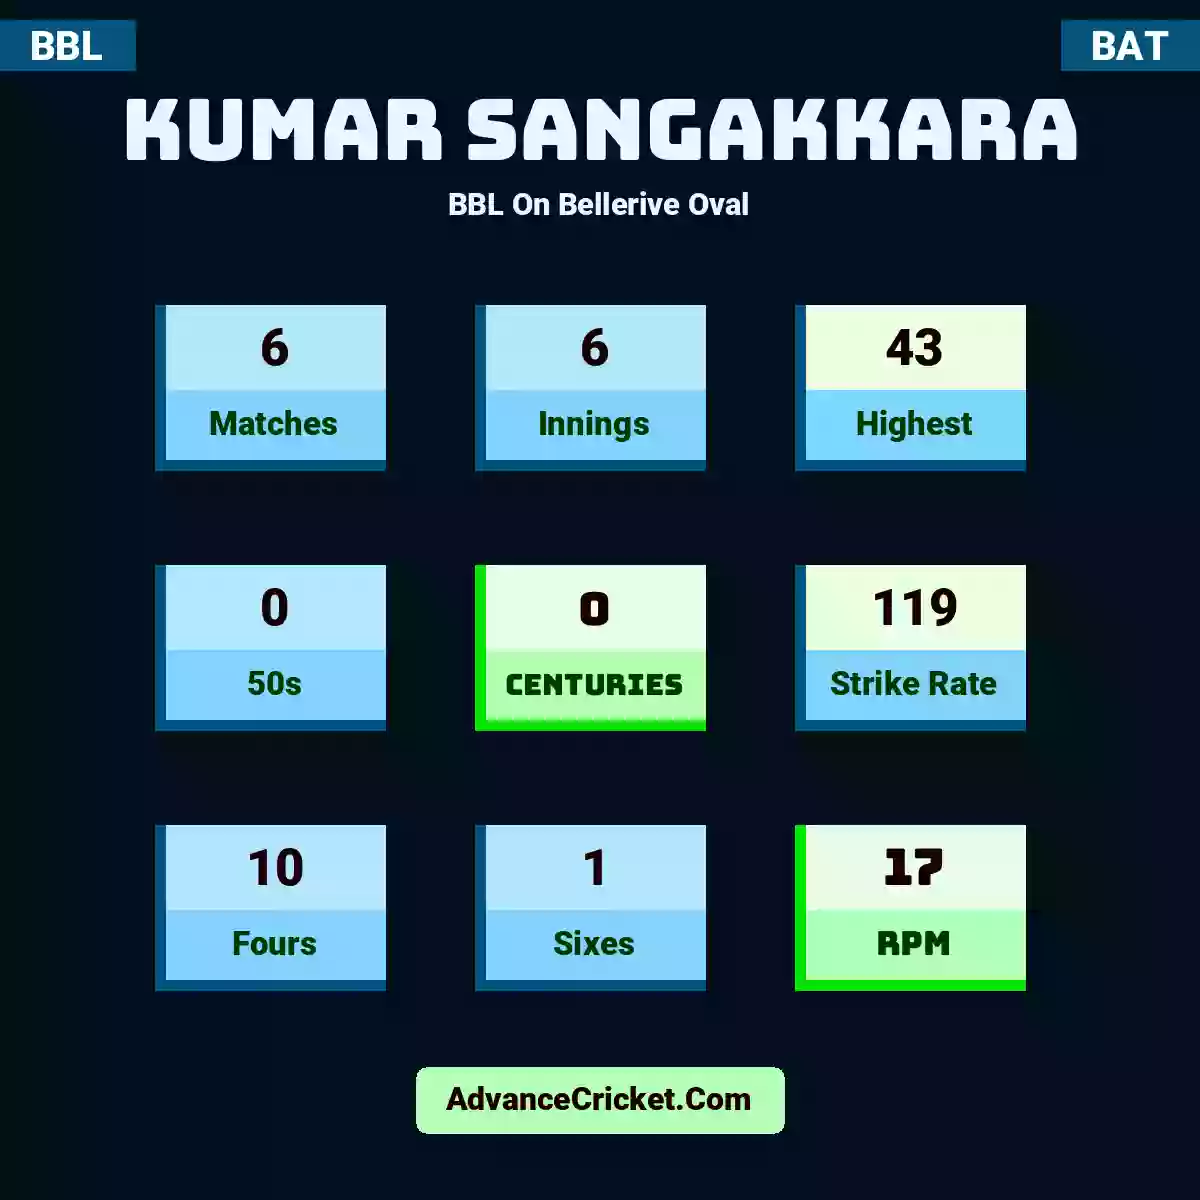 Kumar Sangakkara BBL  On Bellerive Oval, Kumar Sangakkara played 6 matches, scored 43 runs as highest, 0 half-centuries, and 0 centuries, with a strike rate of 119. K.Sangakkara hit 10 fours and 1 sixes, with an RPM of 17.